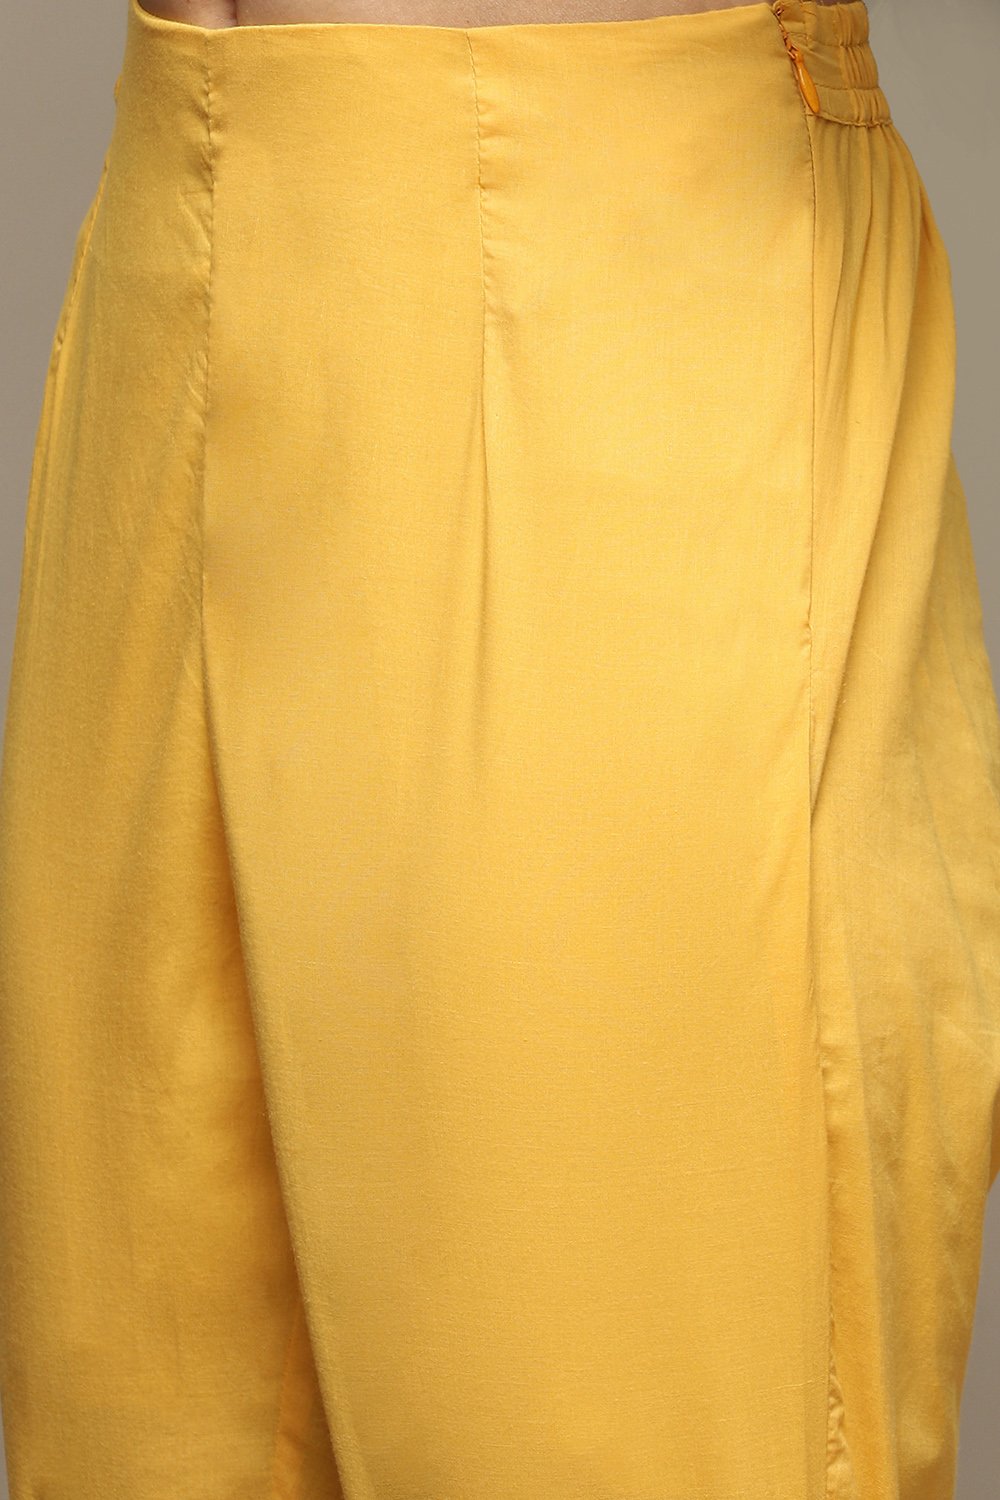 Buy Yellow Straight Kurta Pant Suit Set for INR4975.00 |Biba India